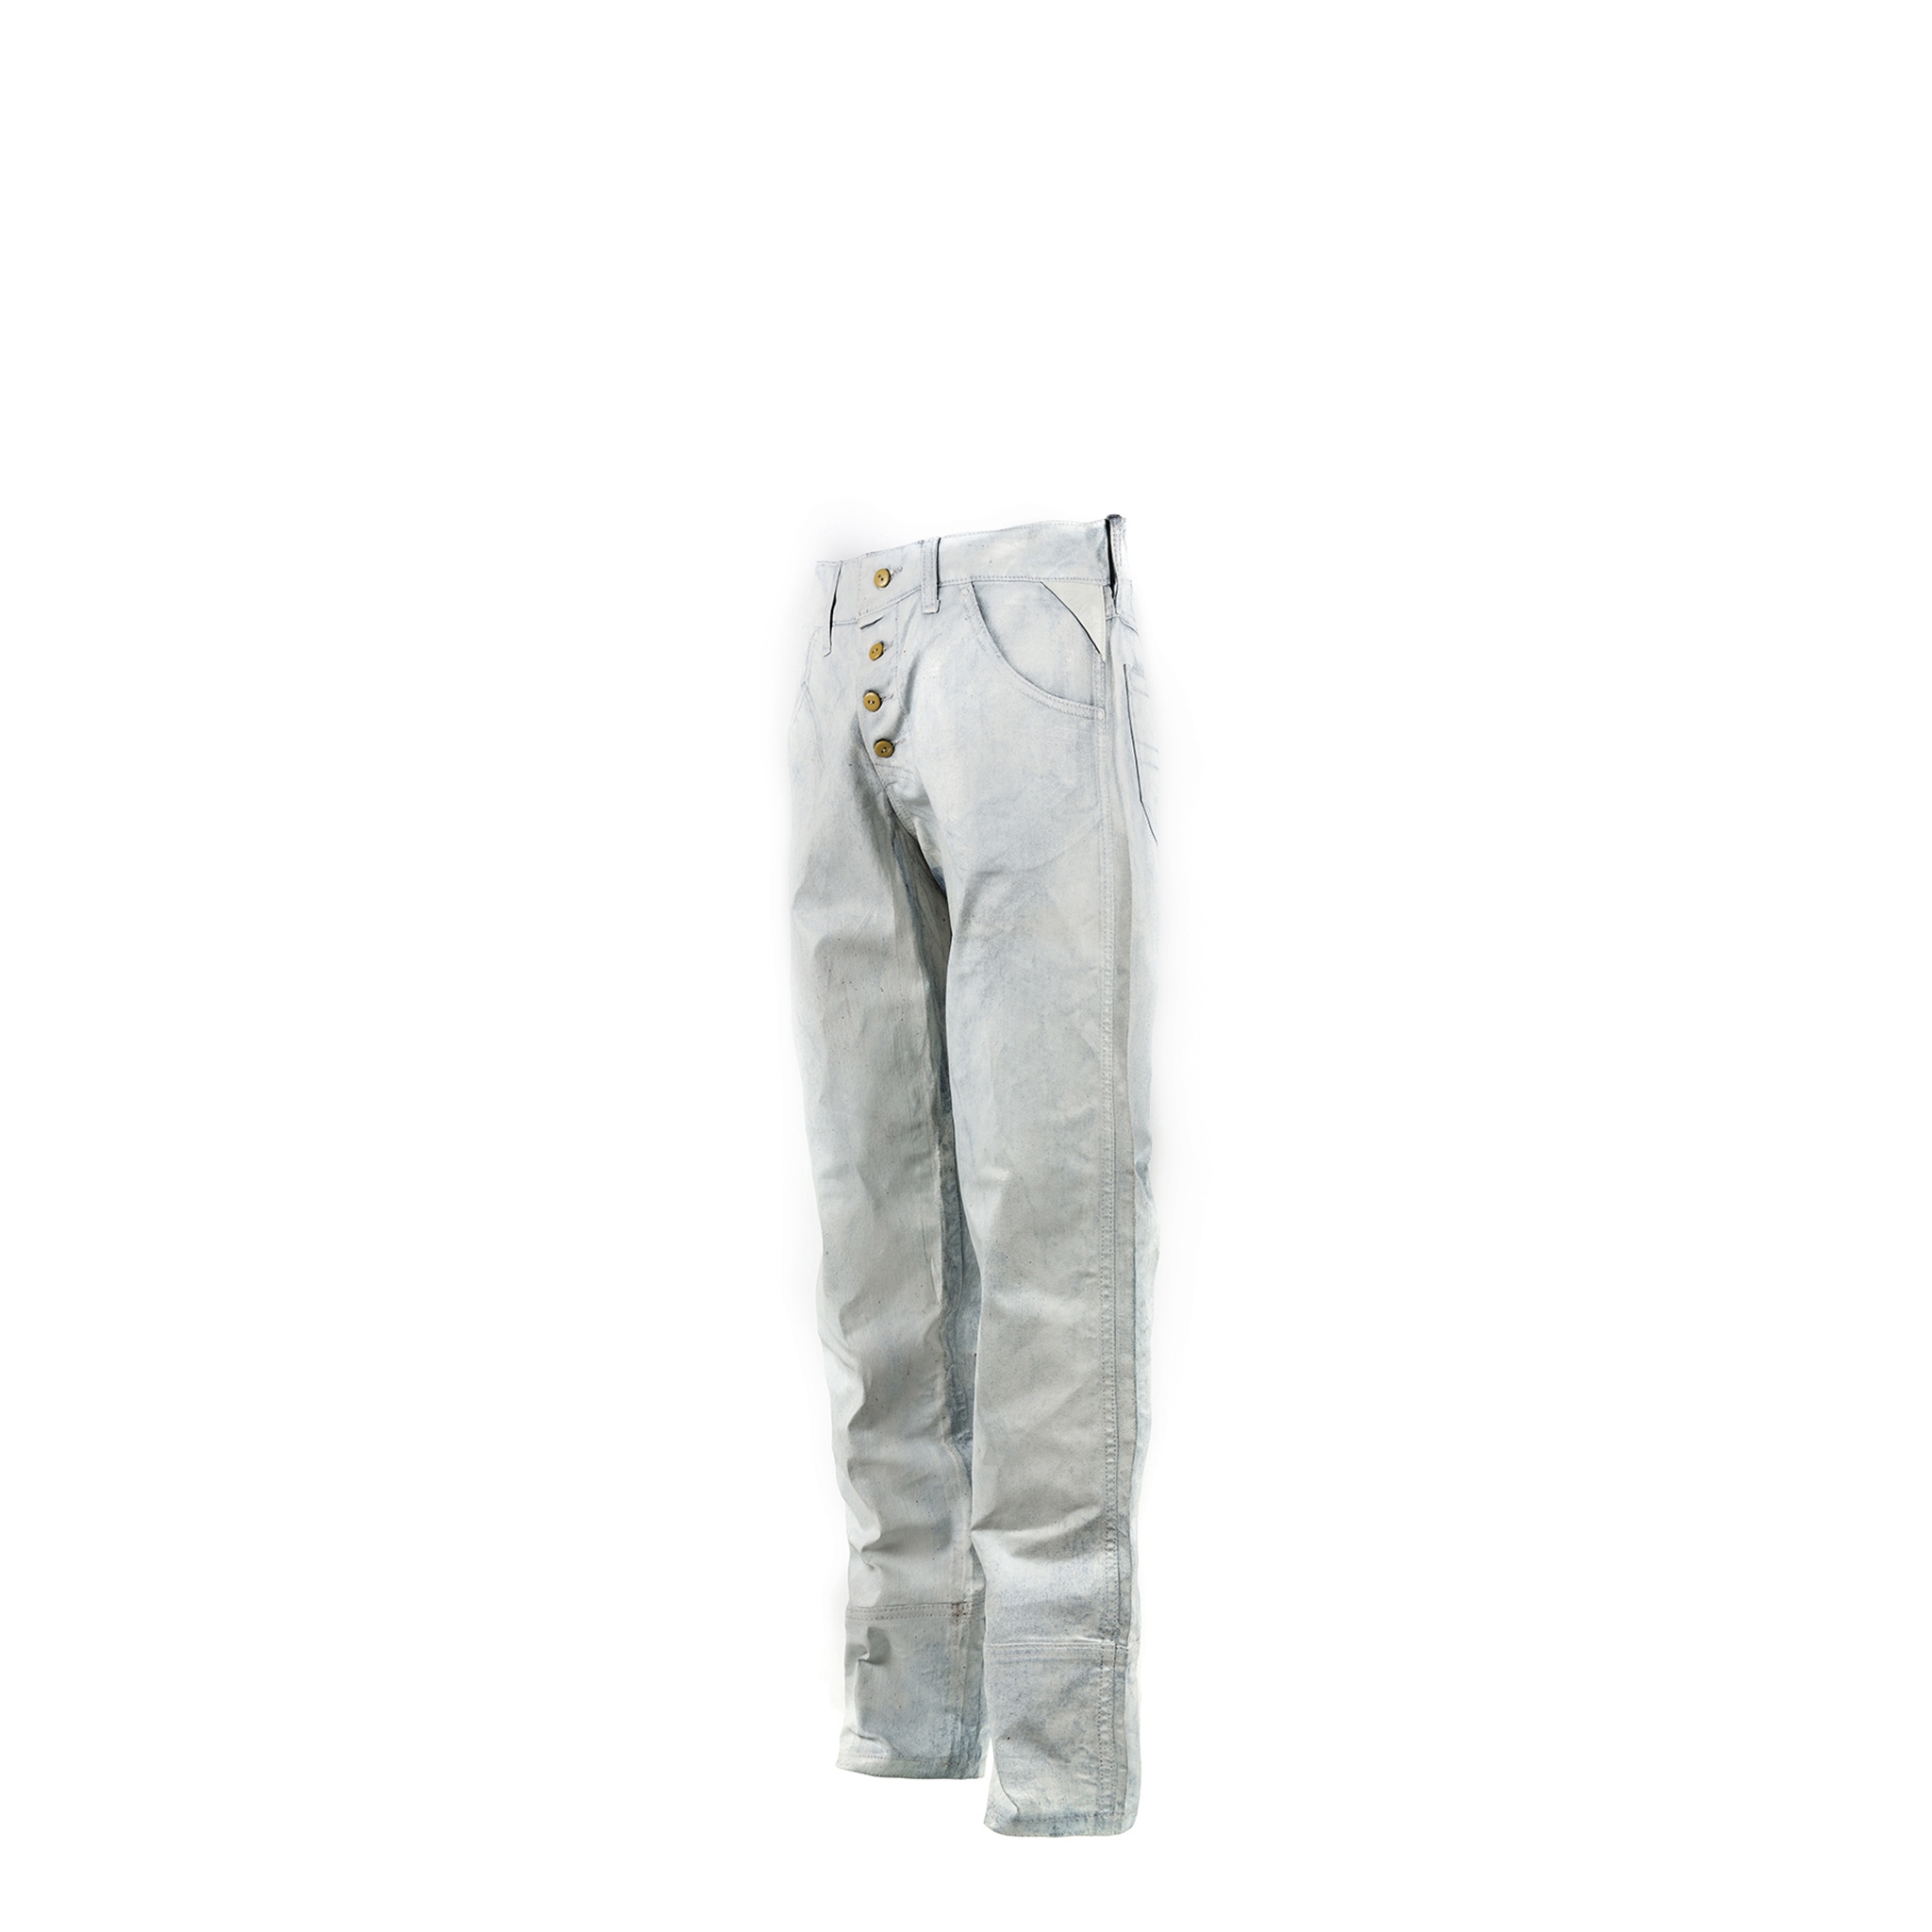 Jeans 2006 A - Nappa finish - White color